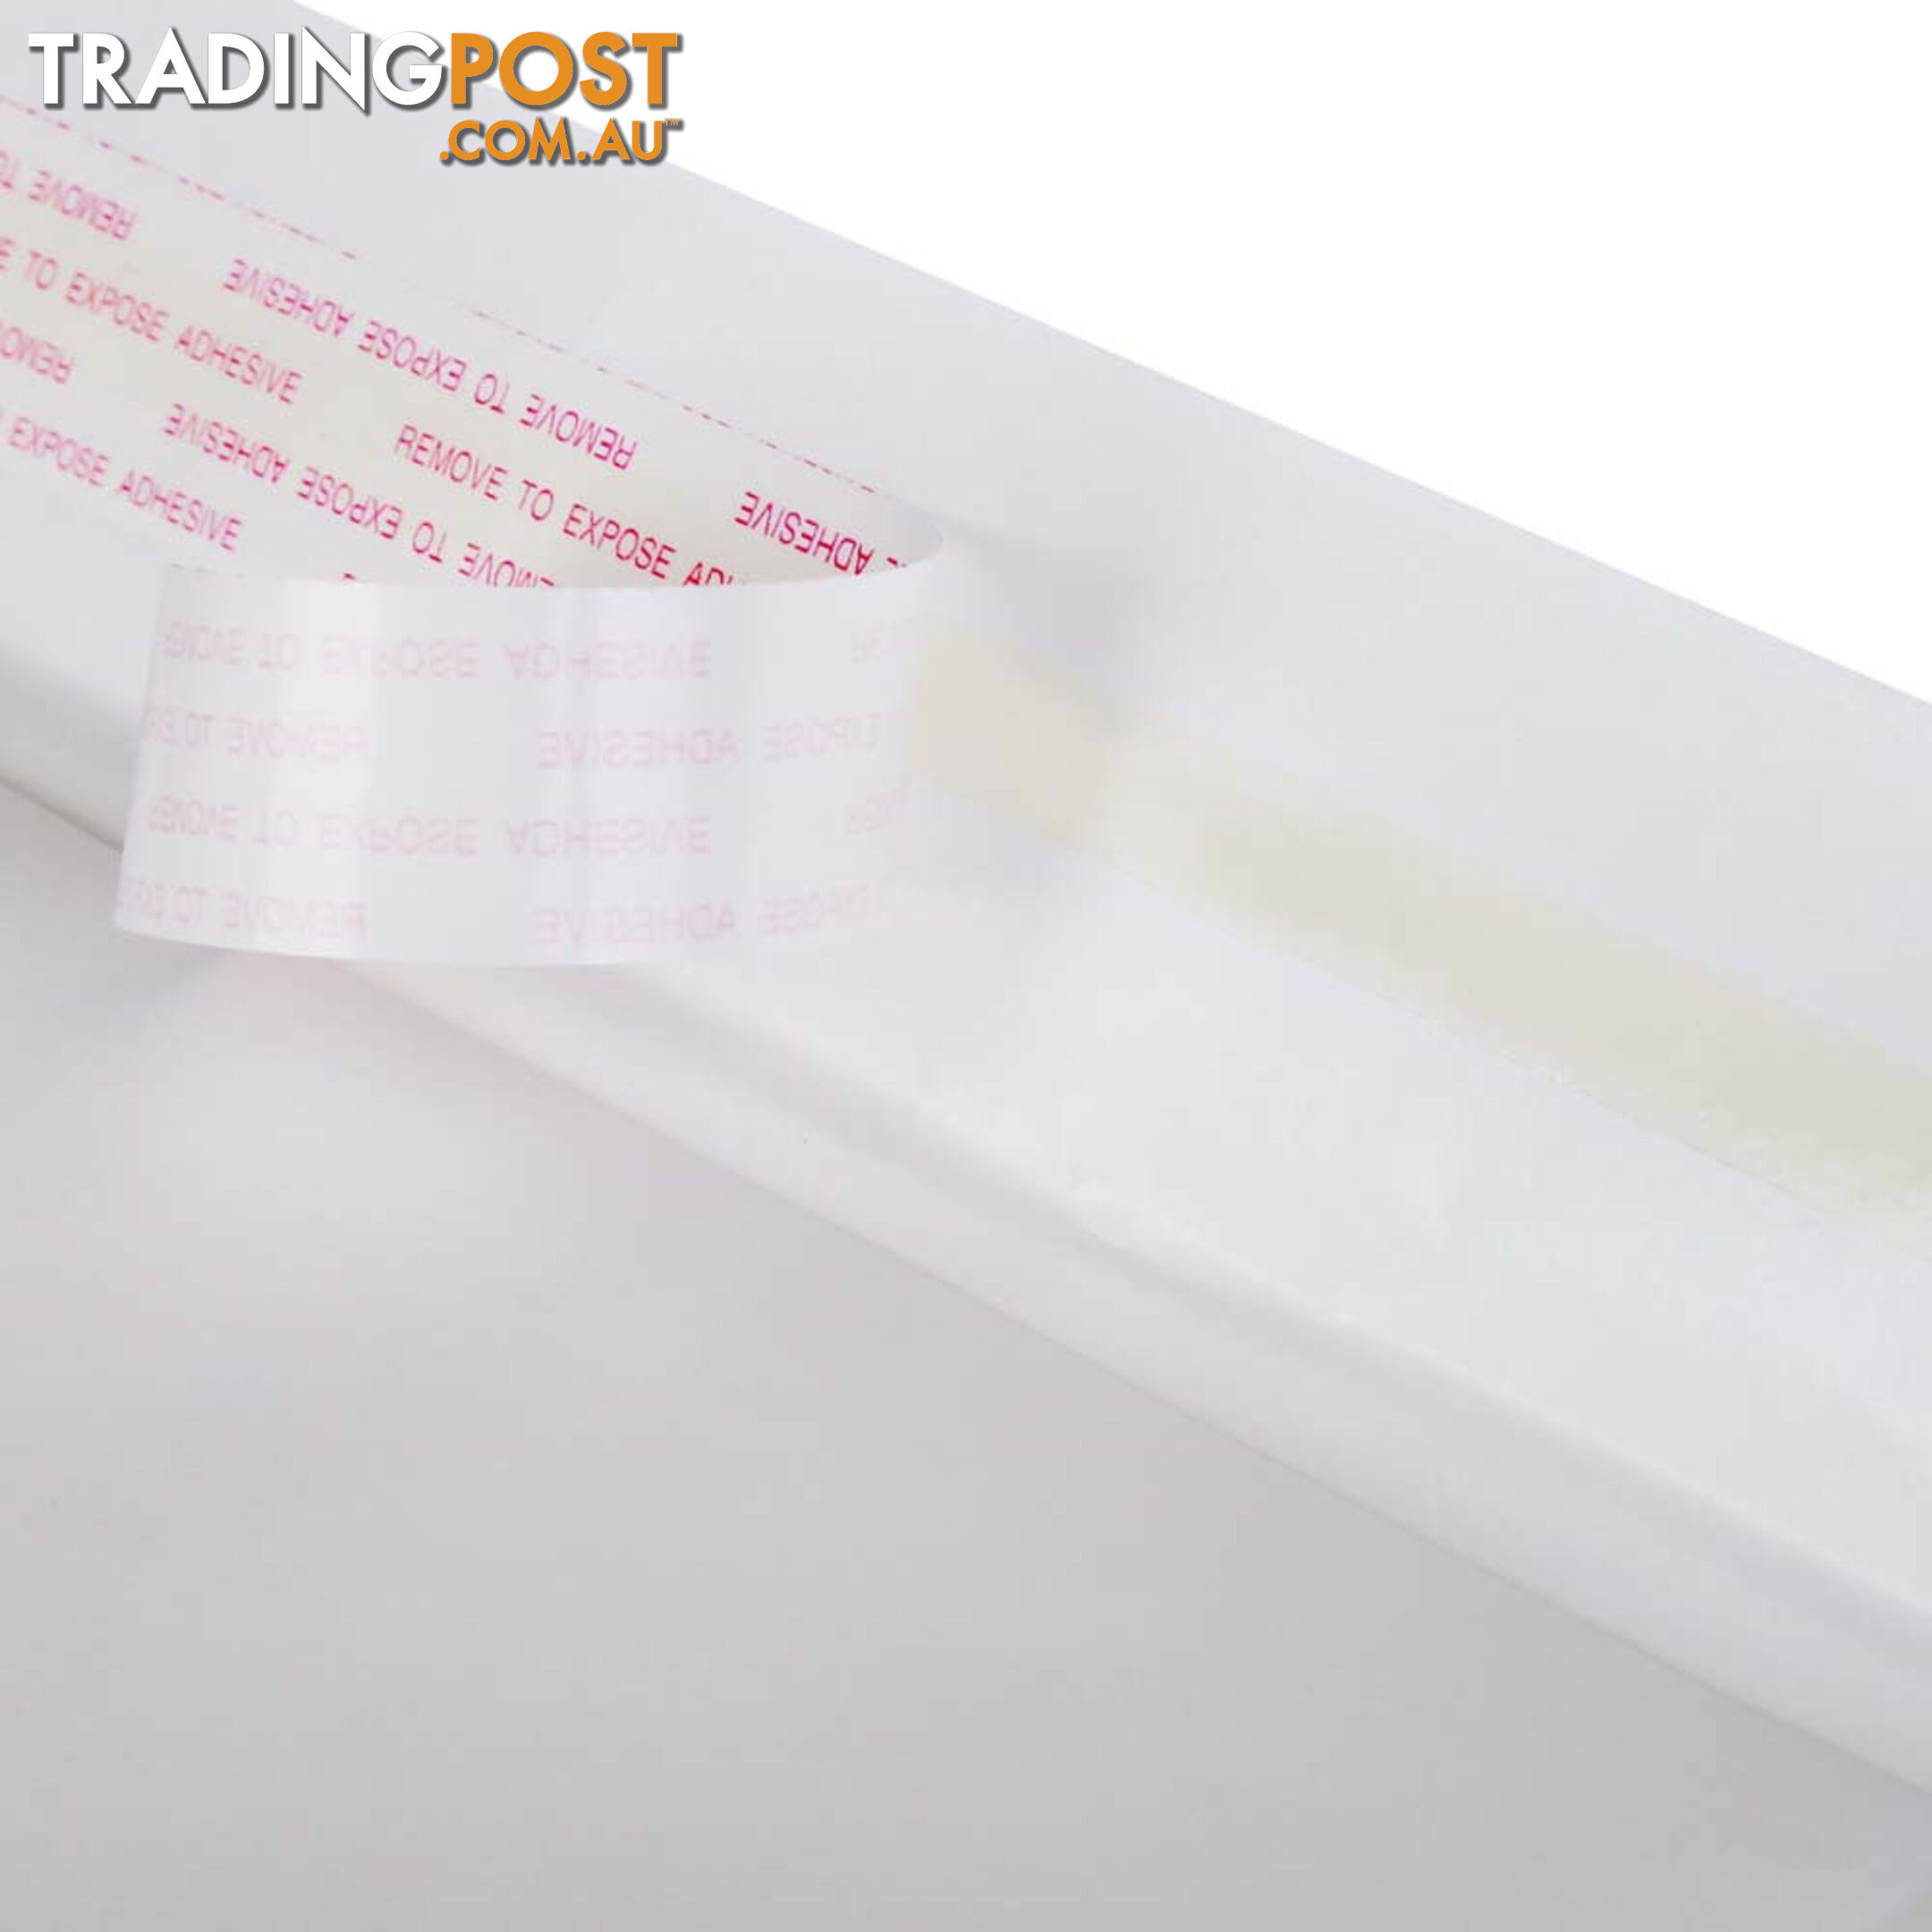 Bubble Padded Mail Envelopes 500pcs 160mm x 230mm